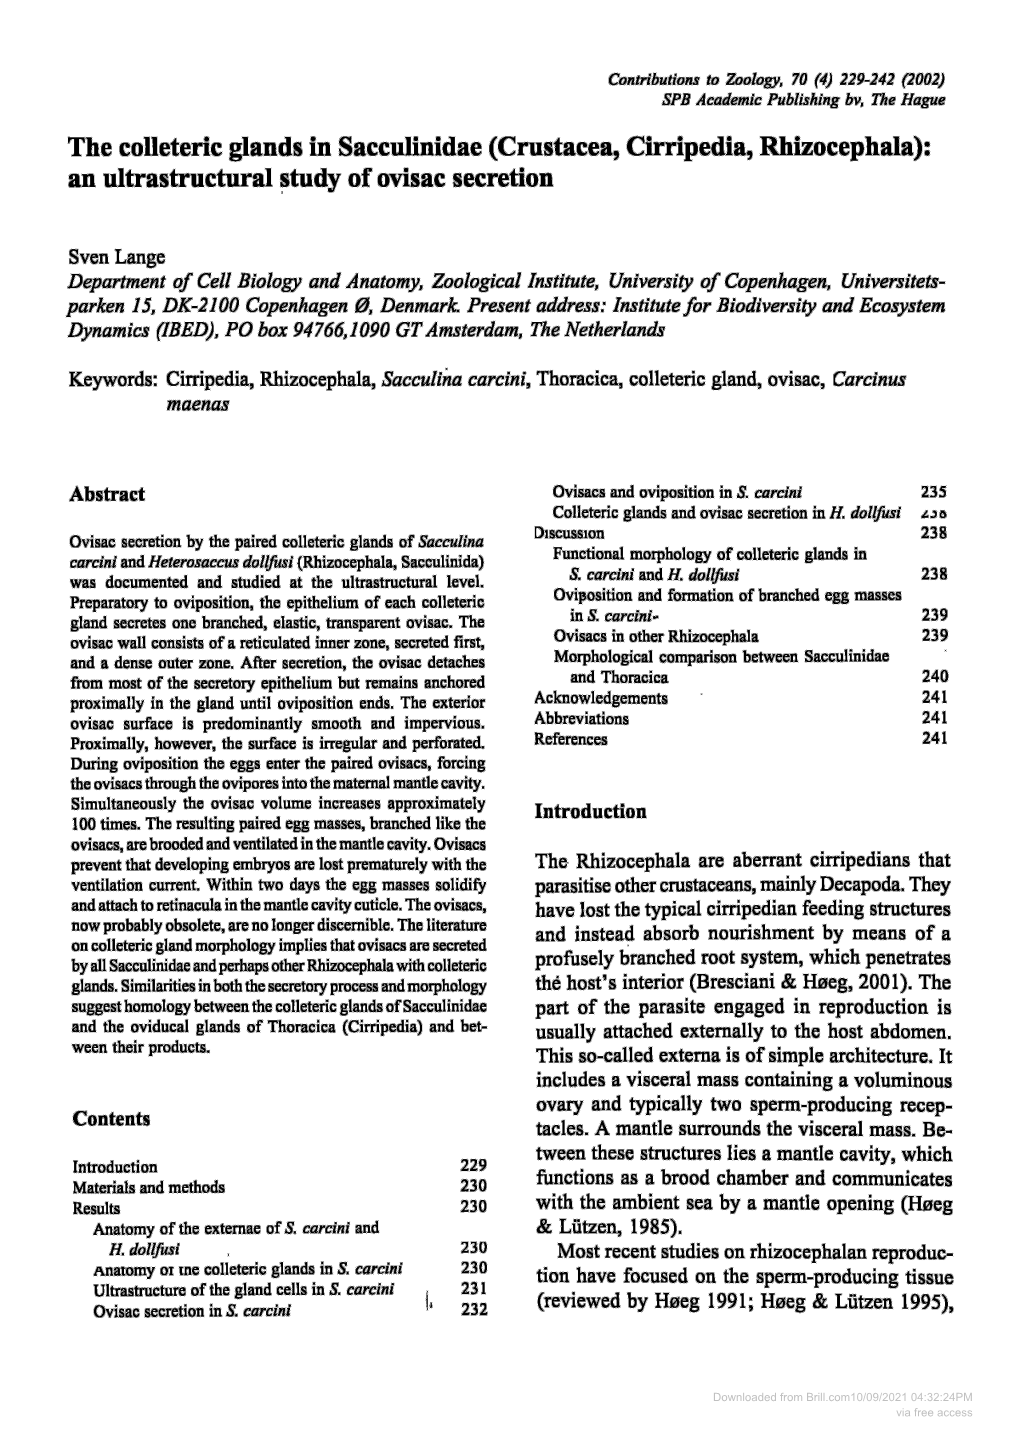 The Colleteric Glands in Sacculinidae (Crustacea, Cirripedia, Rhizocephala): an Ultrastructural Study of Ovisac Secretion